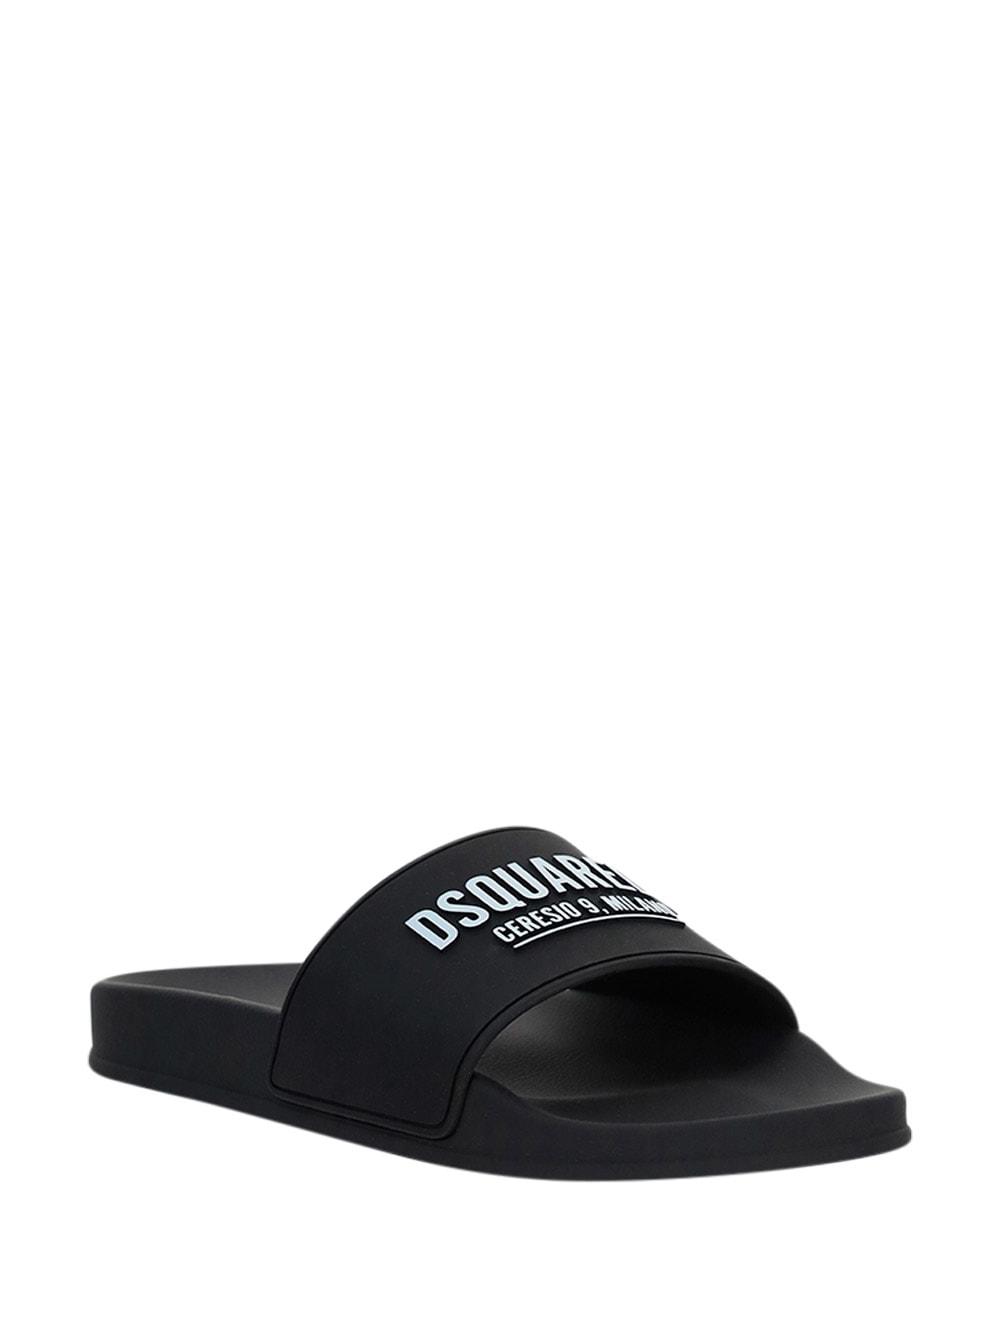 DSquared² Sandals in Black for Men | Lyst